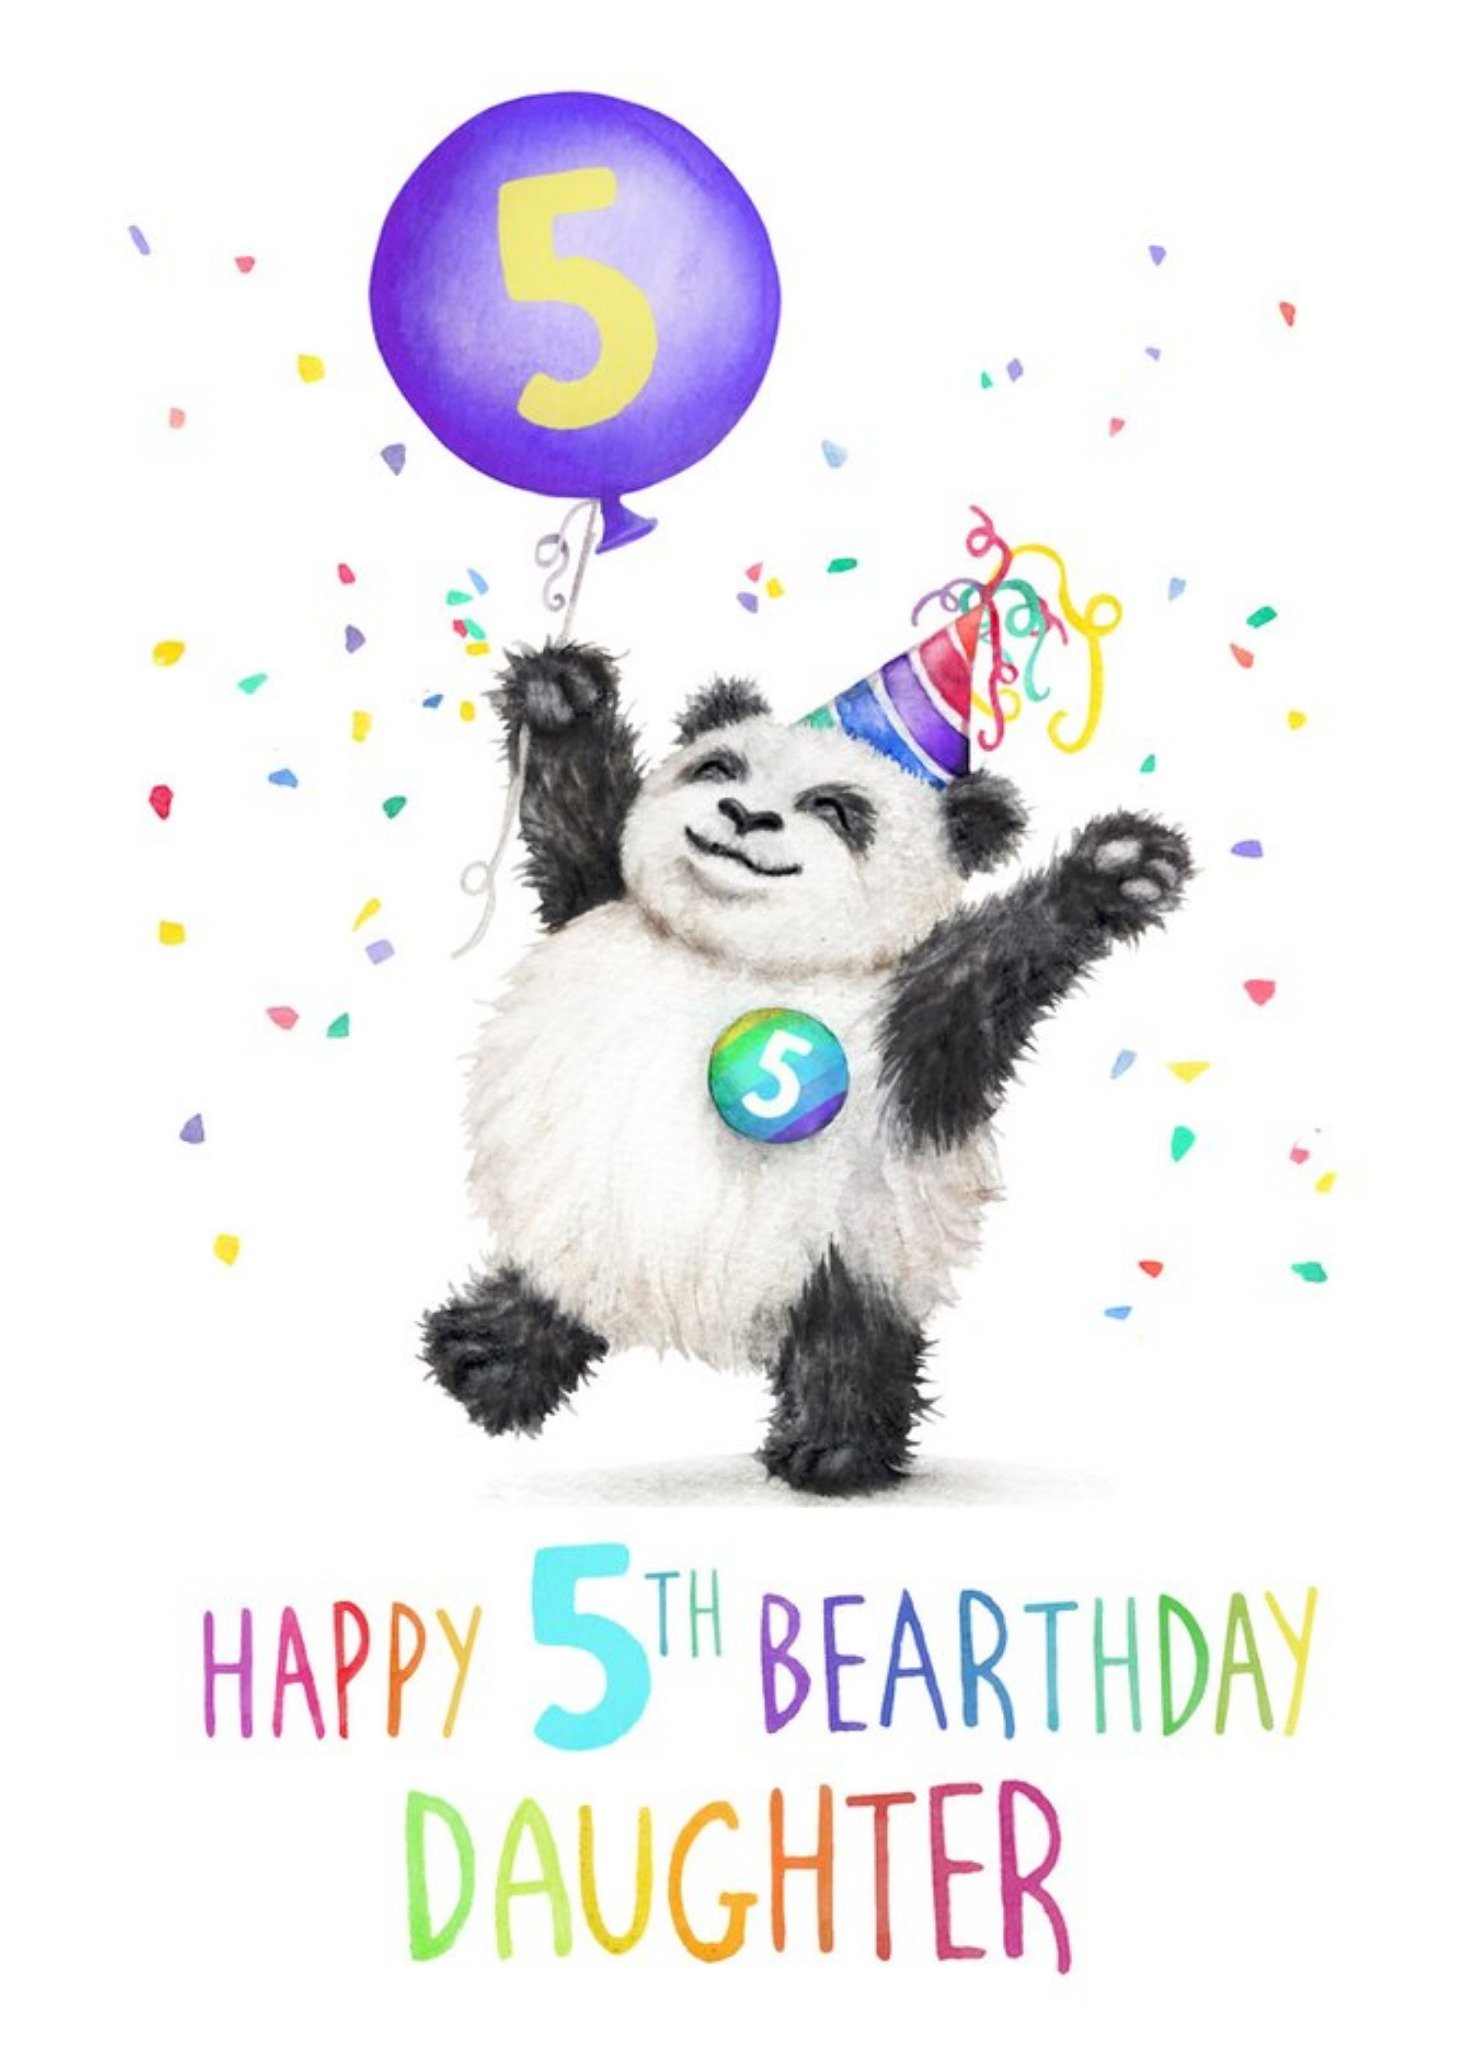 Moonpig Cute Panda Happy 5th Bearthday Daughter Birthday Card, Large